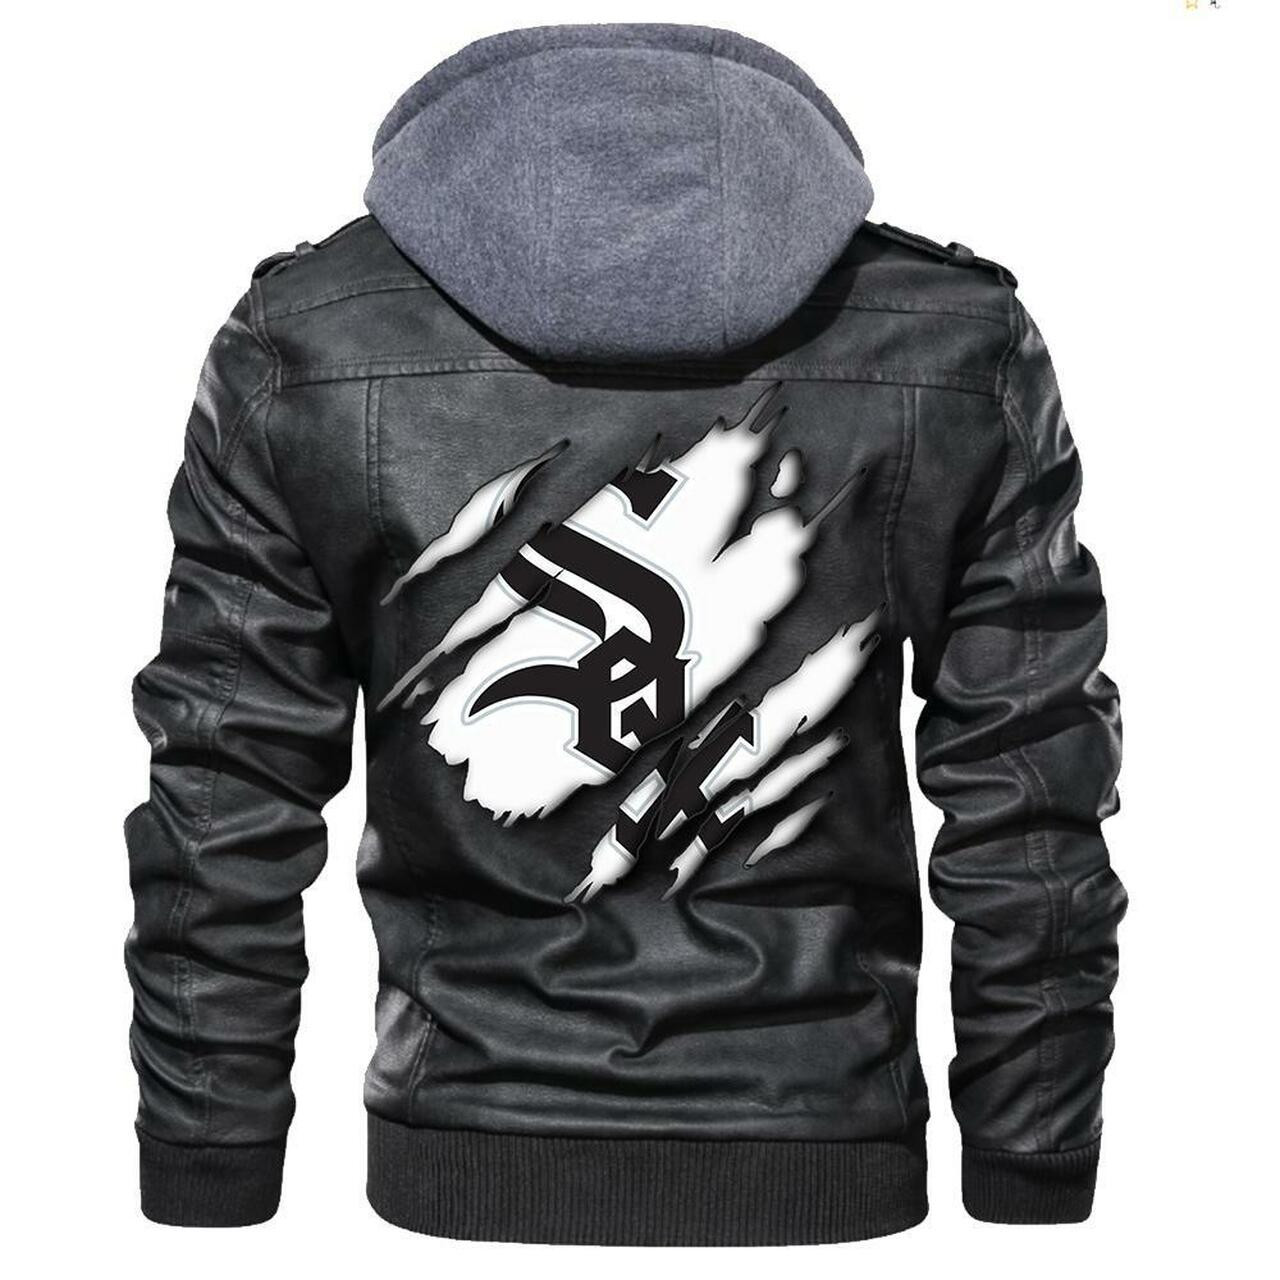 Top leather jacket Sells Best on Techcomshop 153